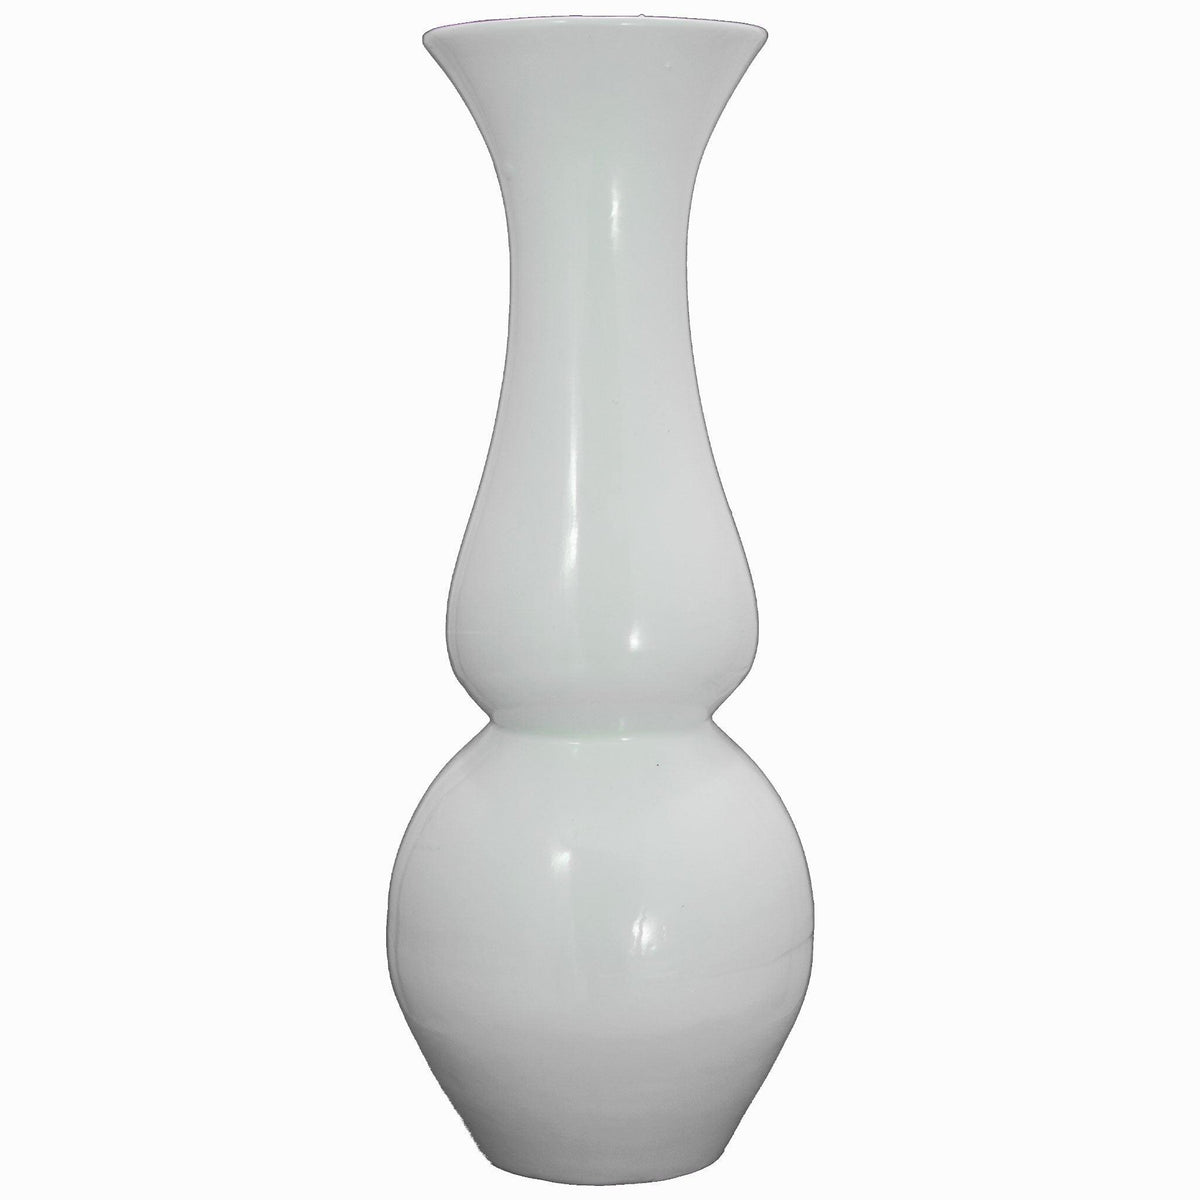 Lee Display's brand new 30in Large Amphora Ceramic Vase Shape on s ale at leedisplay.com